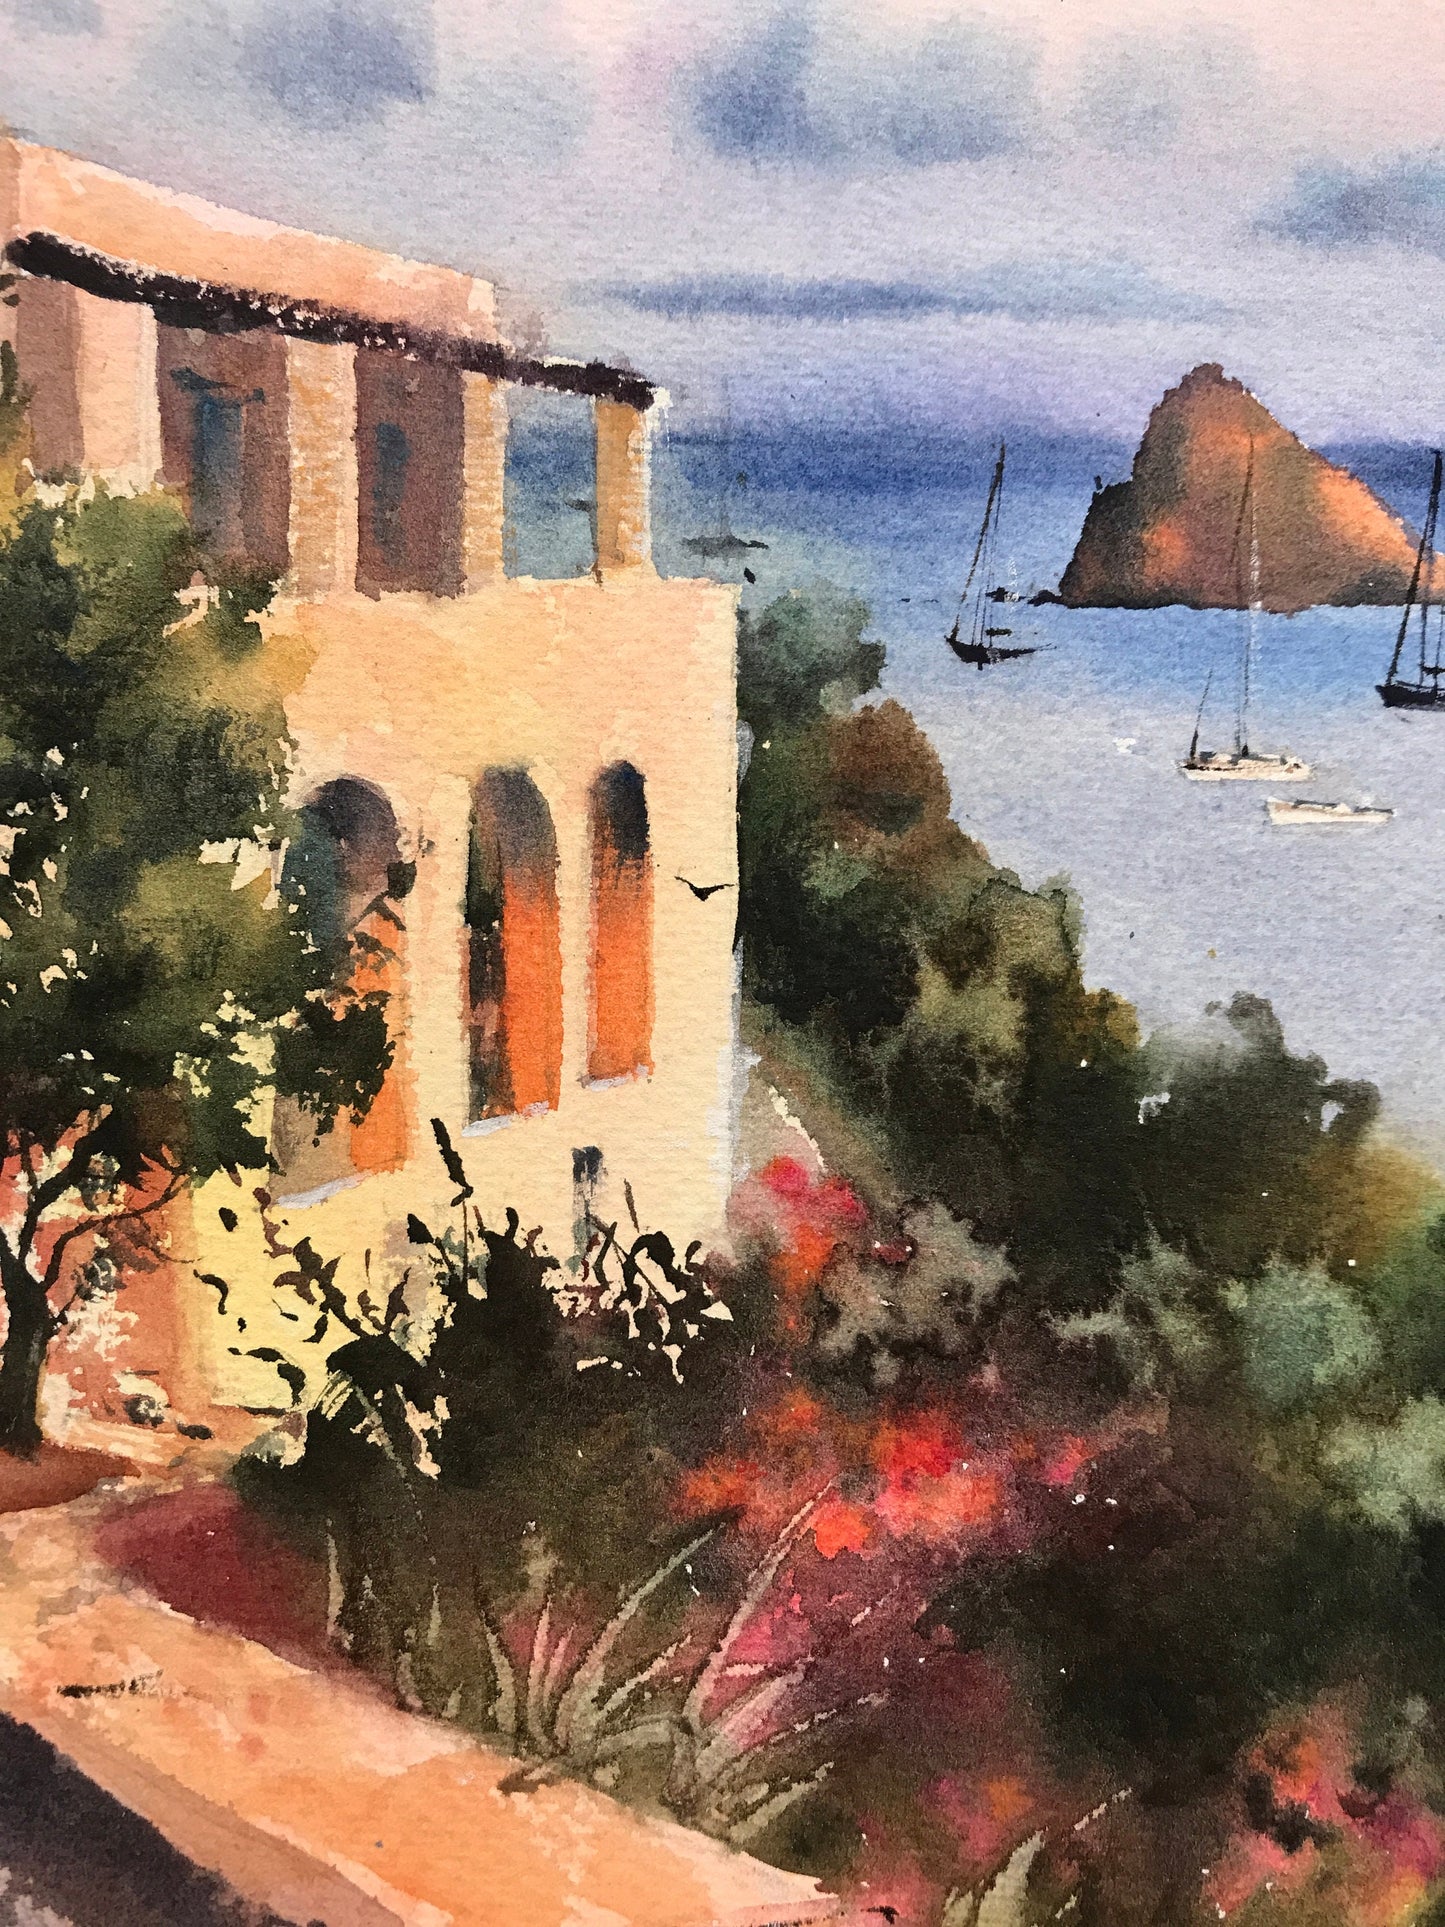 Panarea Painting Original, Watercolor Artwork, Italy Coastal Wall Art, City Sunrise, Gift For Travel Art Lover